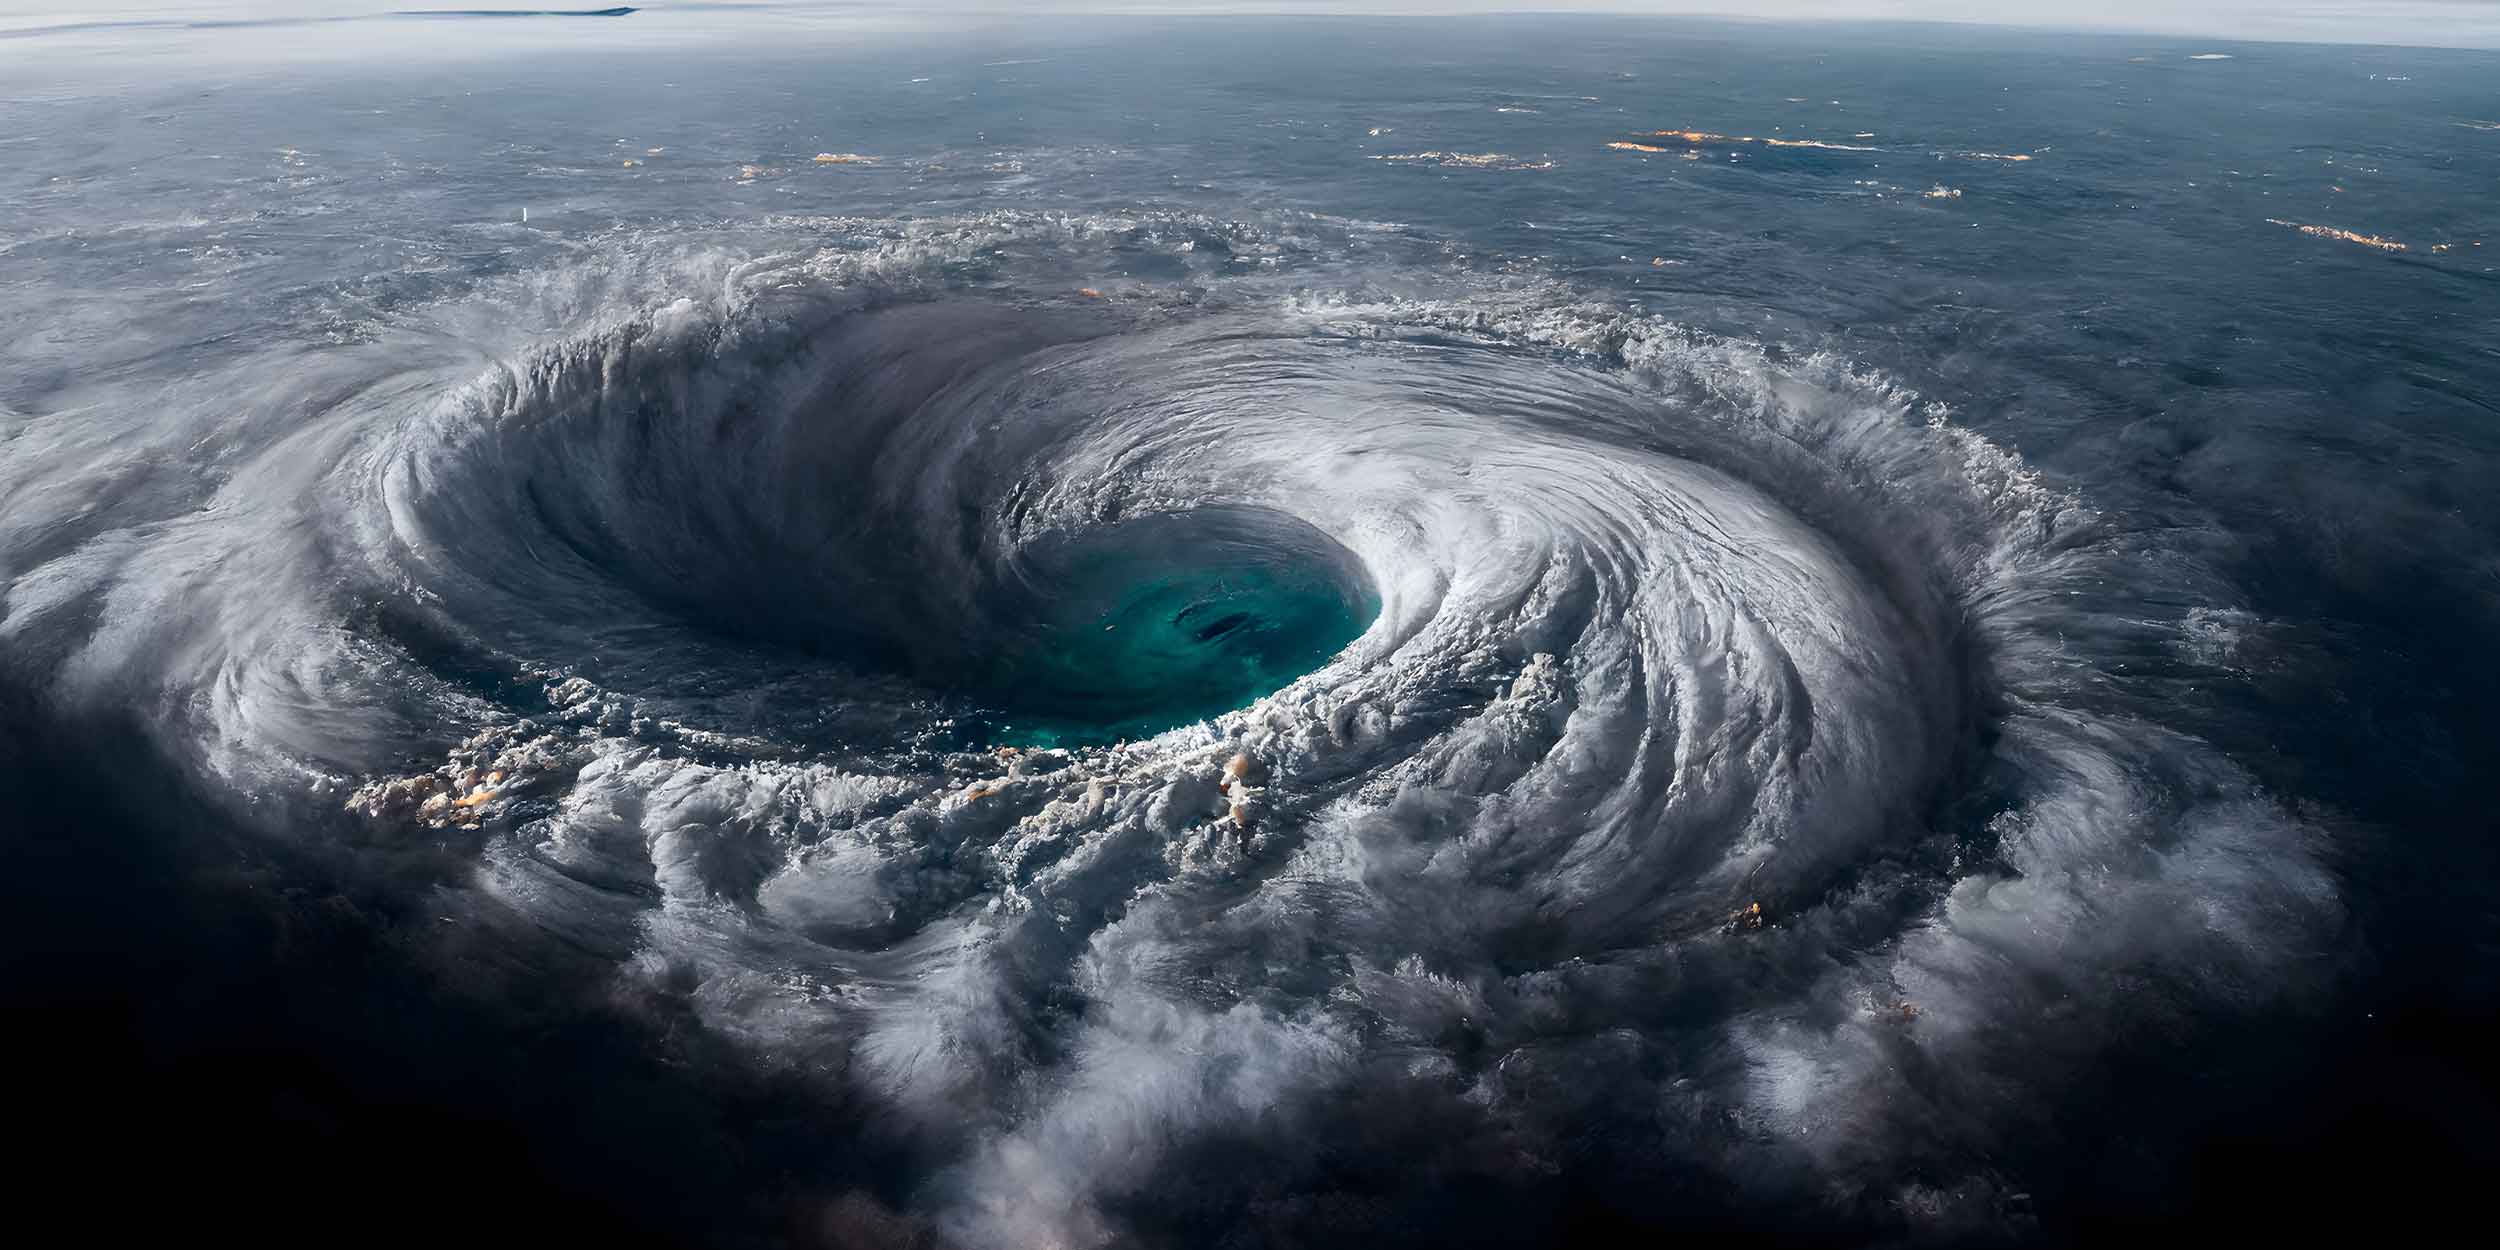 Cyclone vs. Typhoon vs. Hurricane vs. Tornado: Are They All The